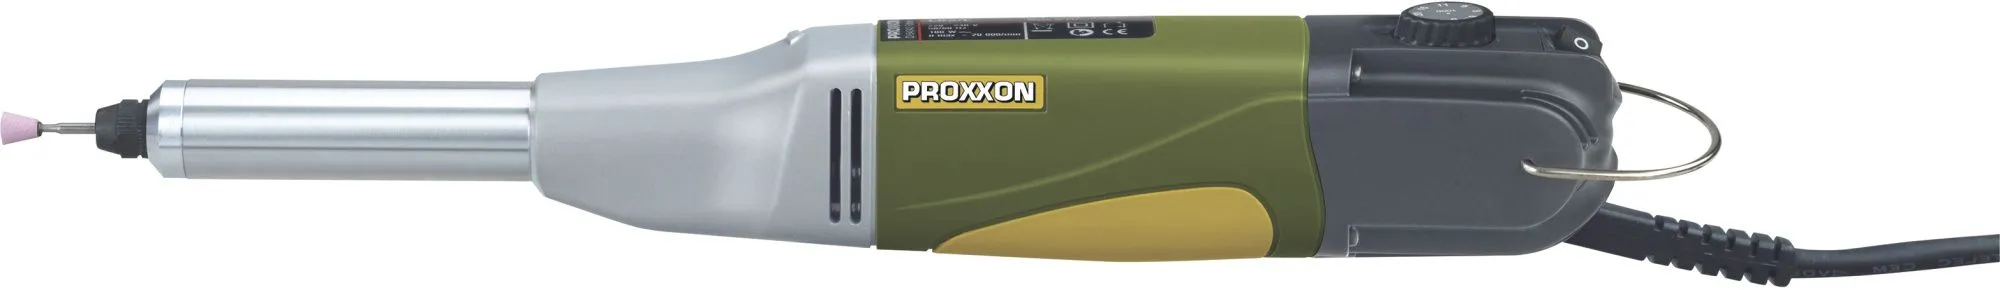 Proxxon LBS/E (28485)